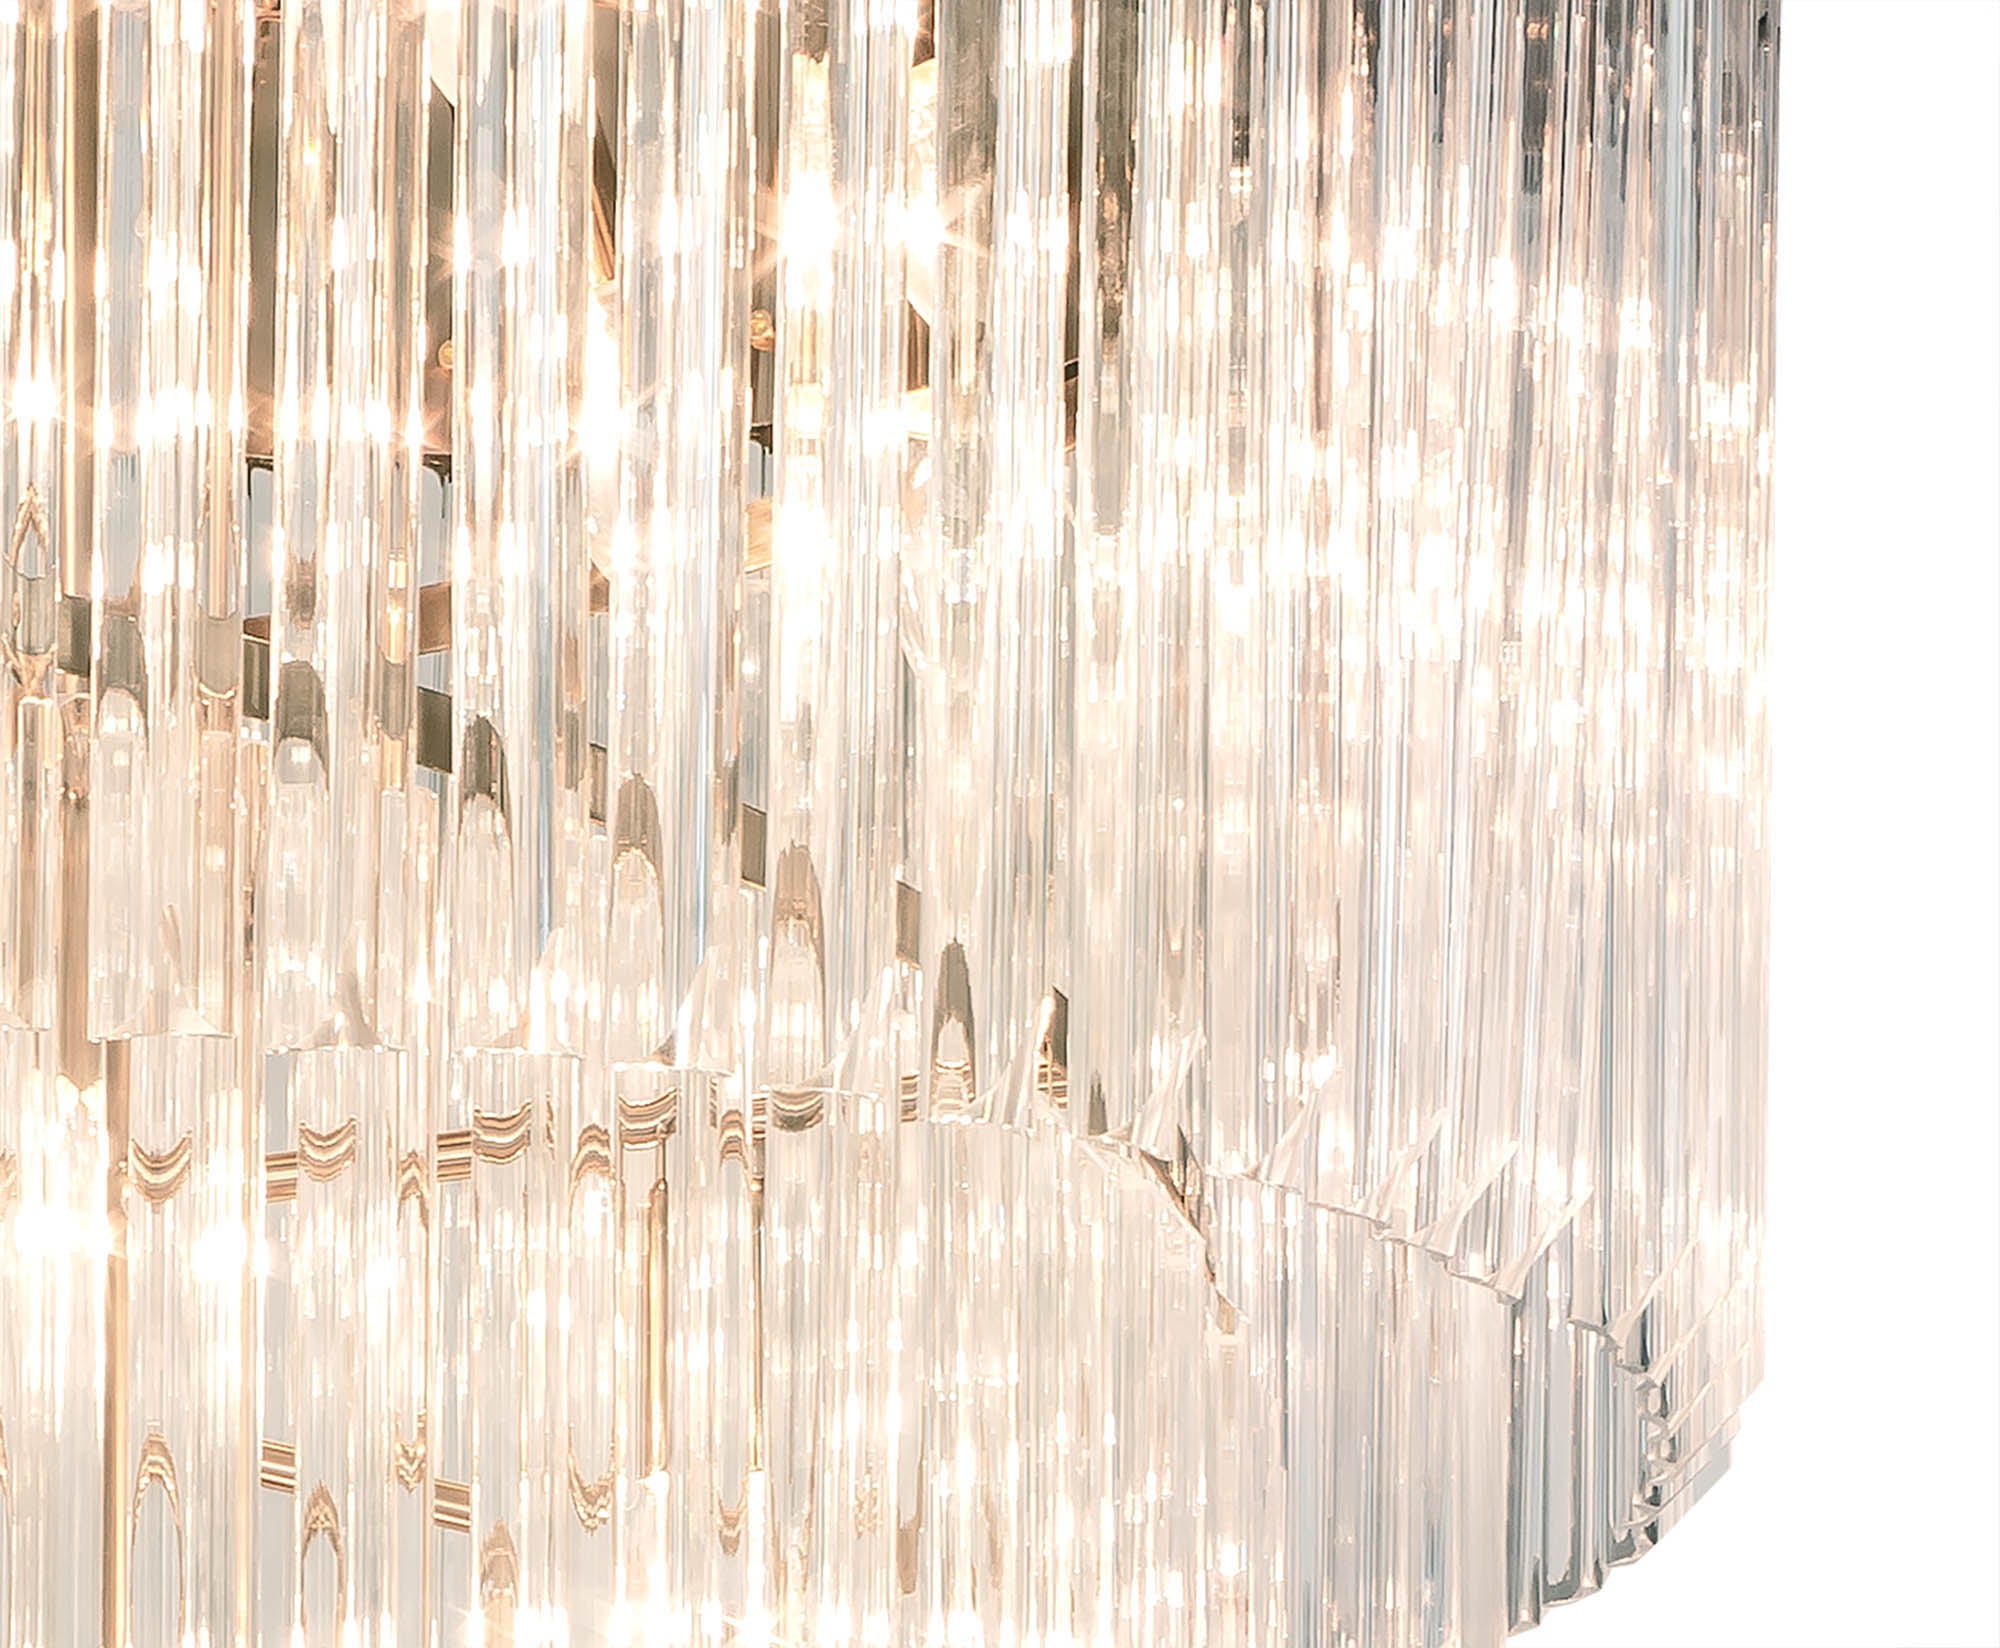 Knightsbridge Pendant Round 5 Tier 23 Light E14, Brass/Clear Glass - LO182313. Item Weight: 56.2kg